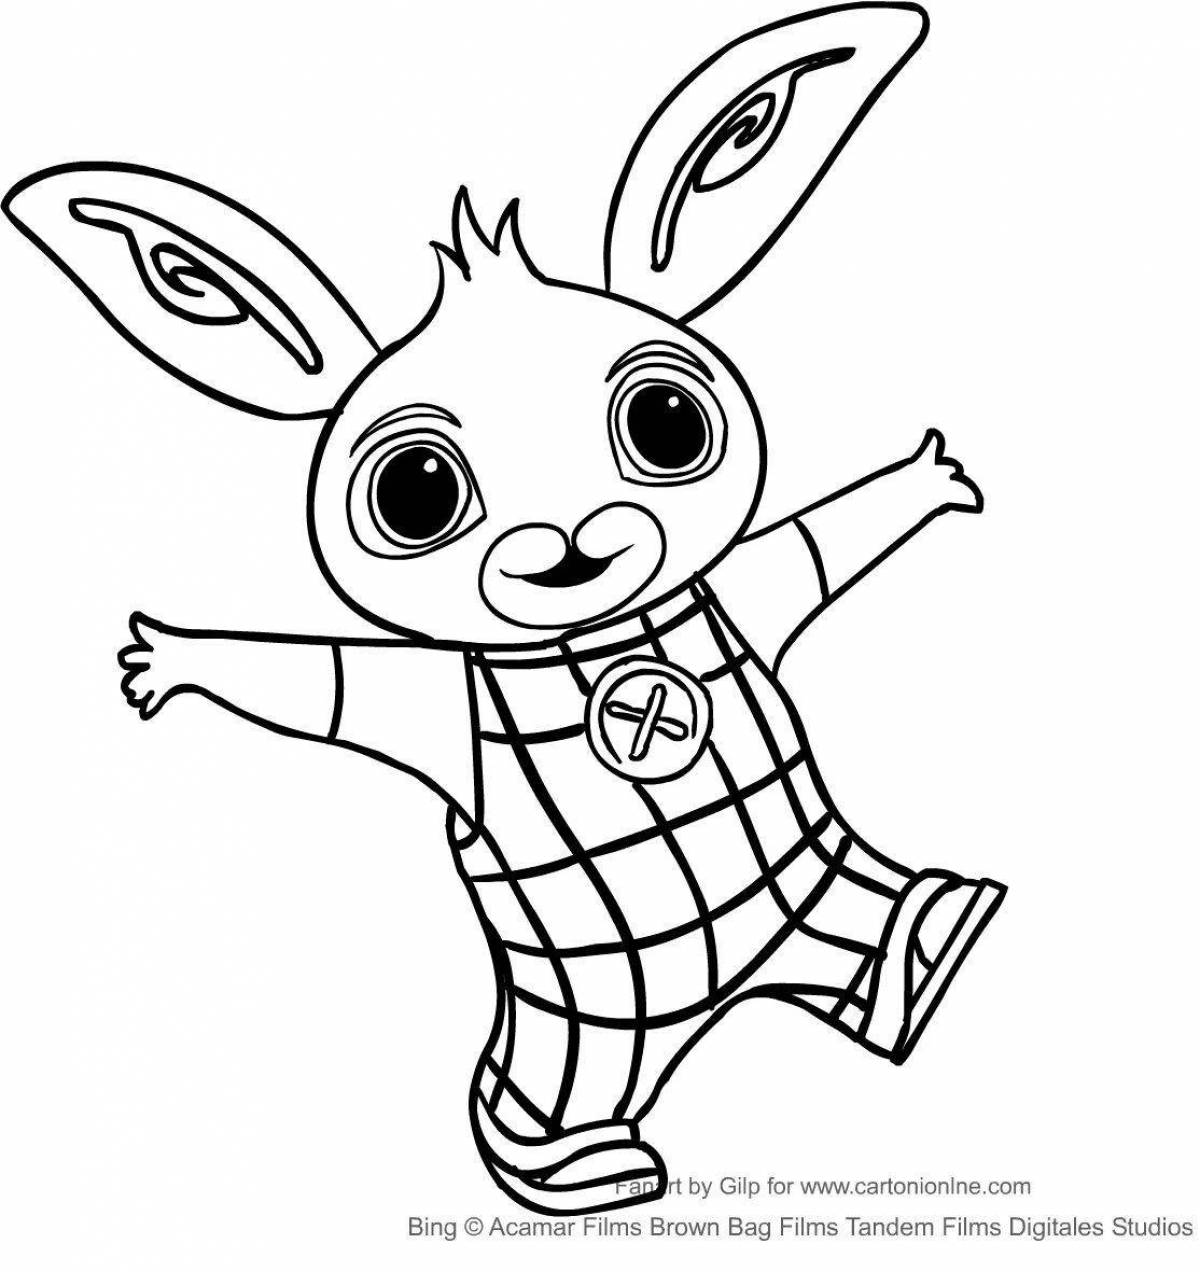 Bing rabbit coloring page